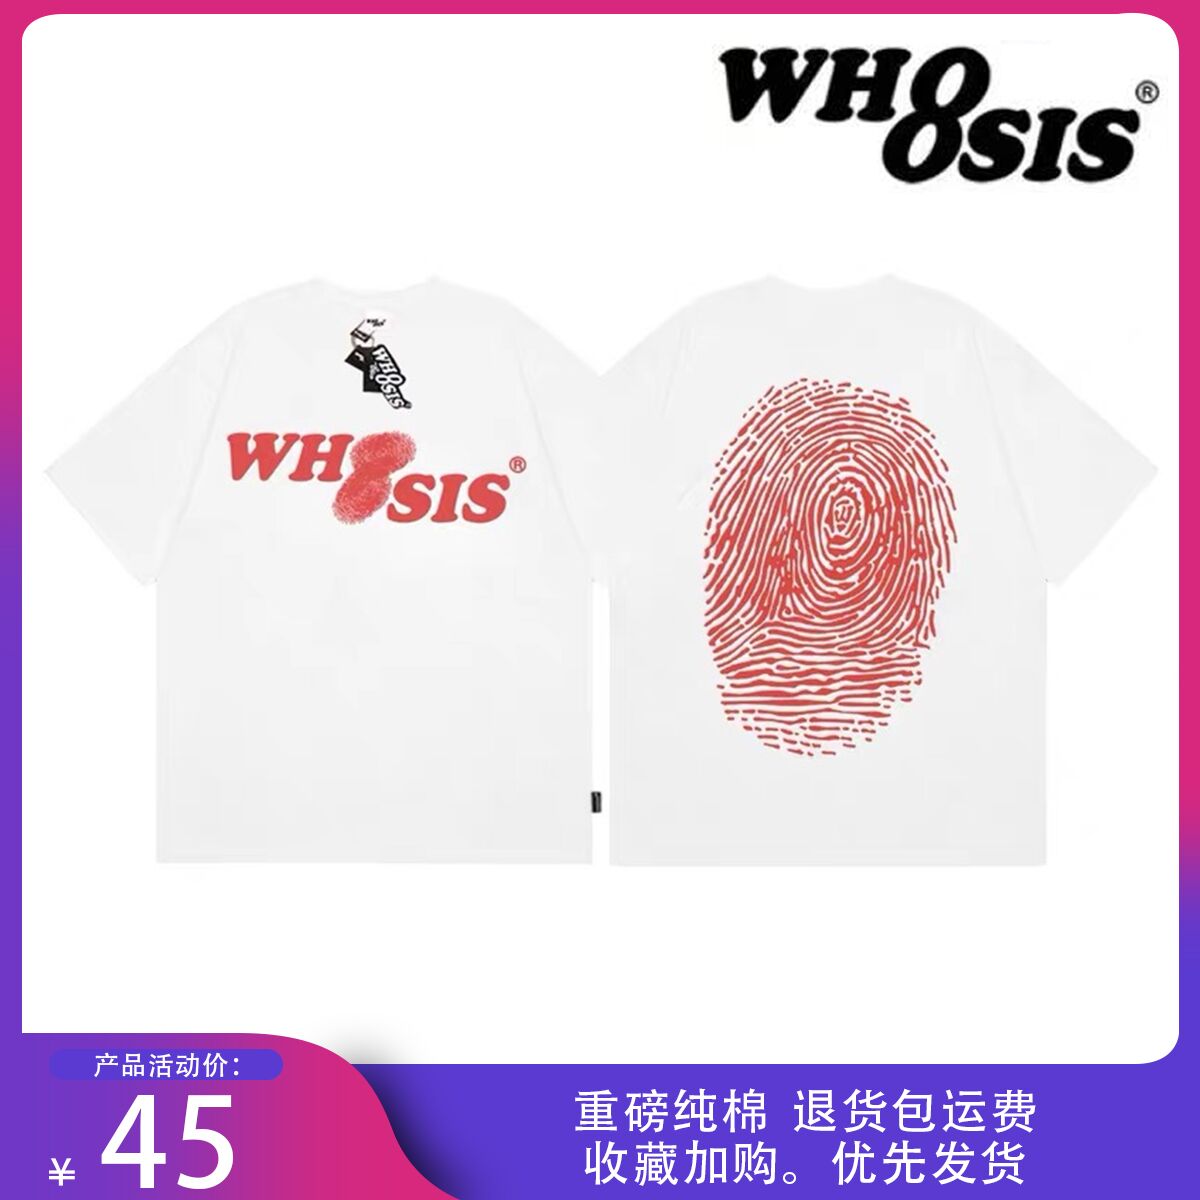 WH8SIS(不知其名)国潮指纹印花短袖重磅纯棉男女宽松情侣街头T恤 男装 T恤 原图主图